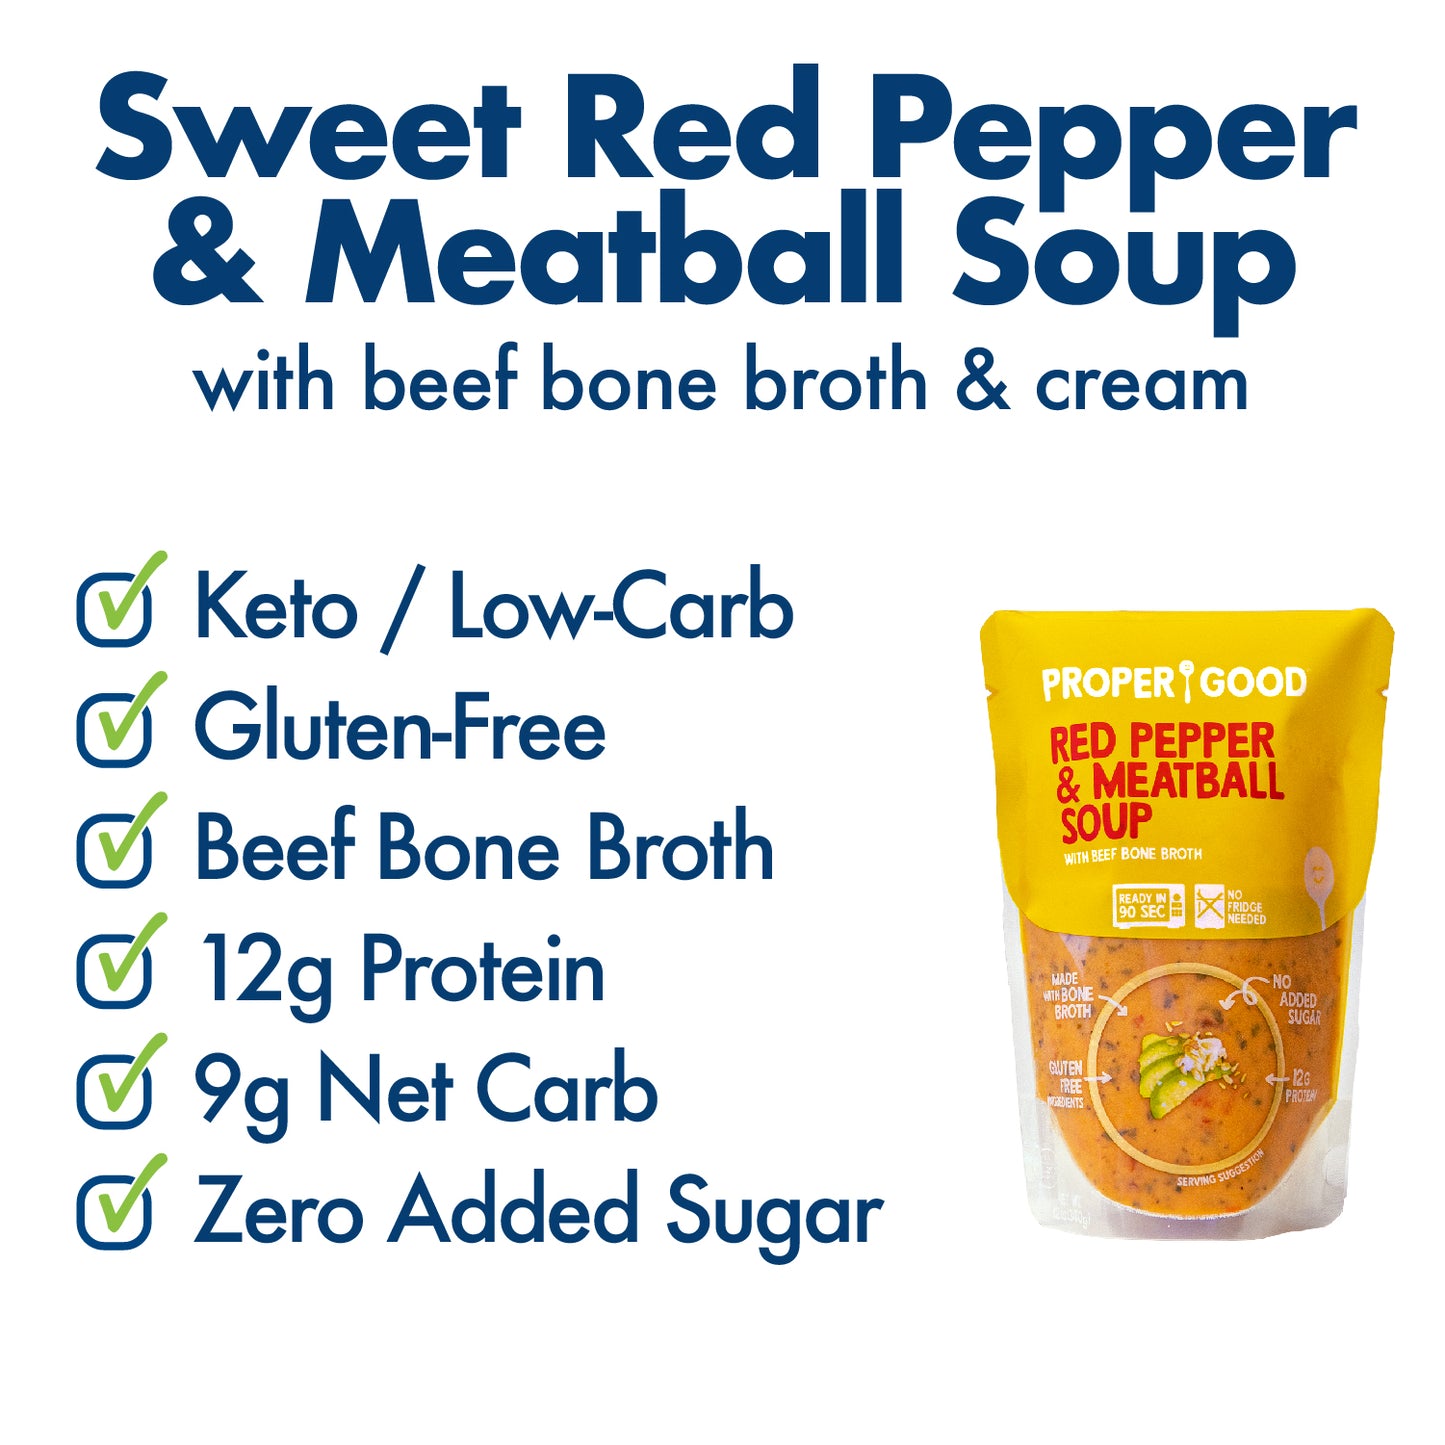 Sweet Red Pepper & Meatball Soup Benefits - Eat Proper Good